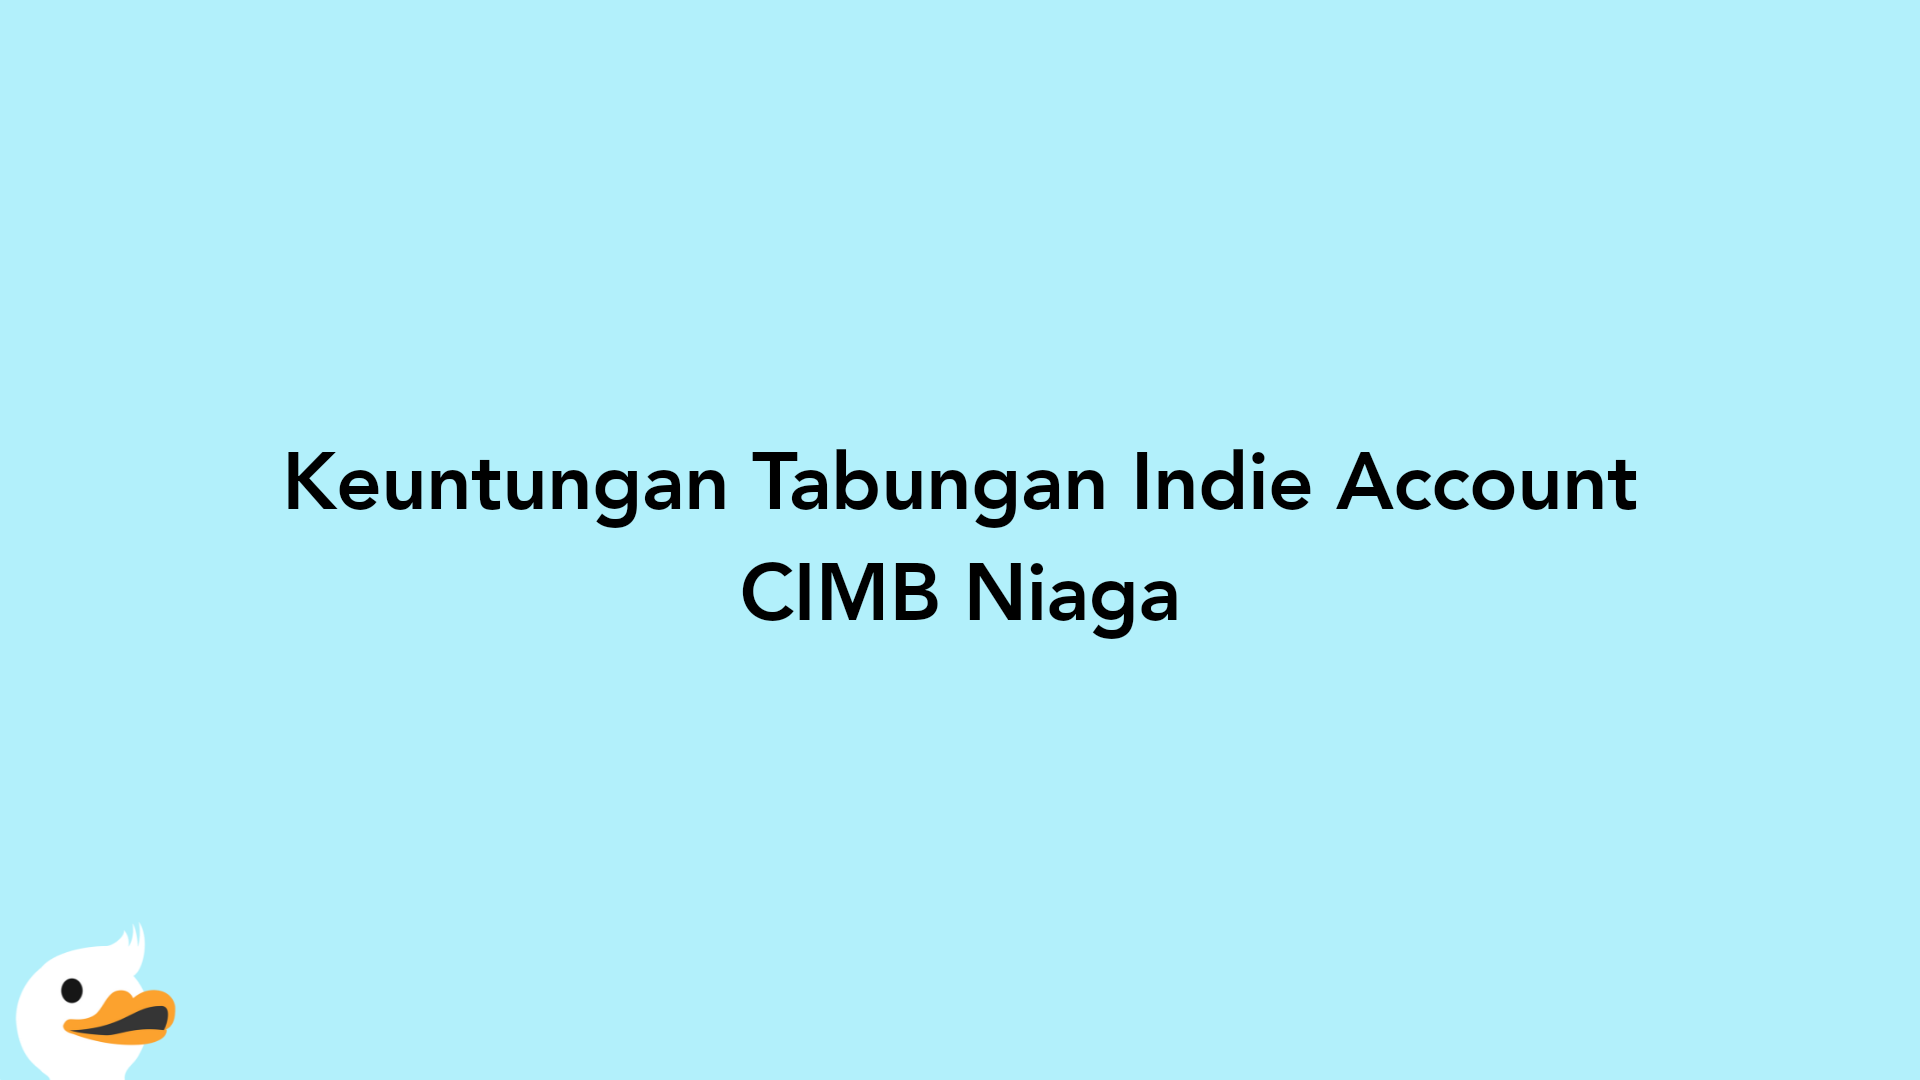 Keuntungan Tabungan Indie Account CIMB Niaga